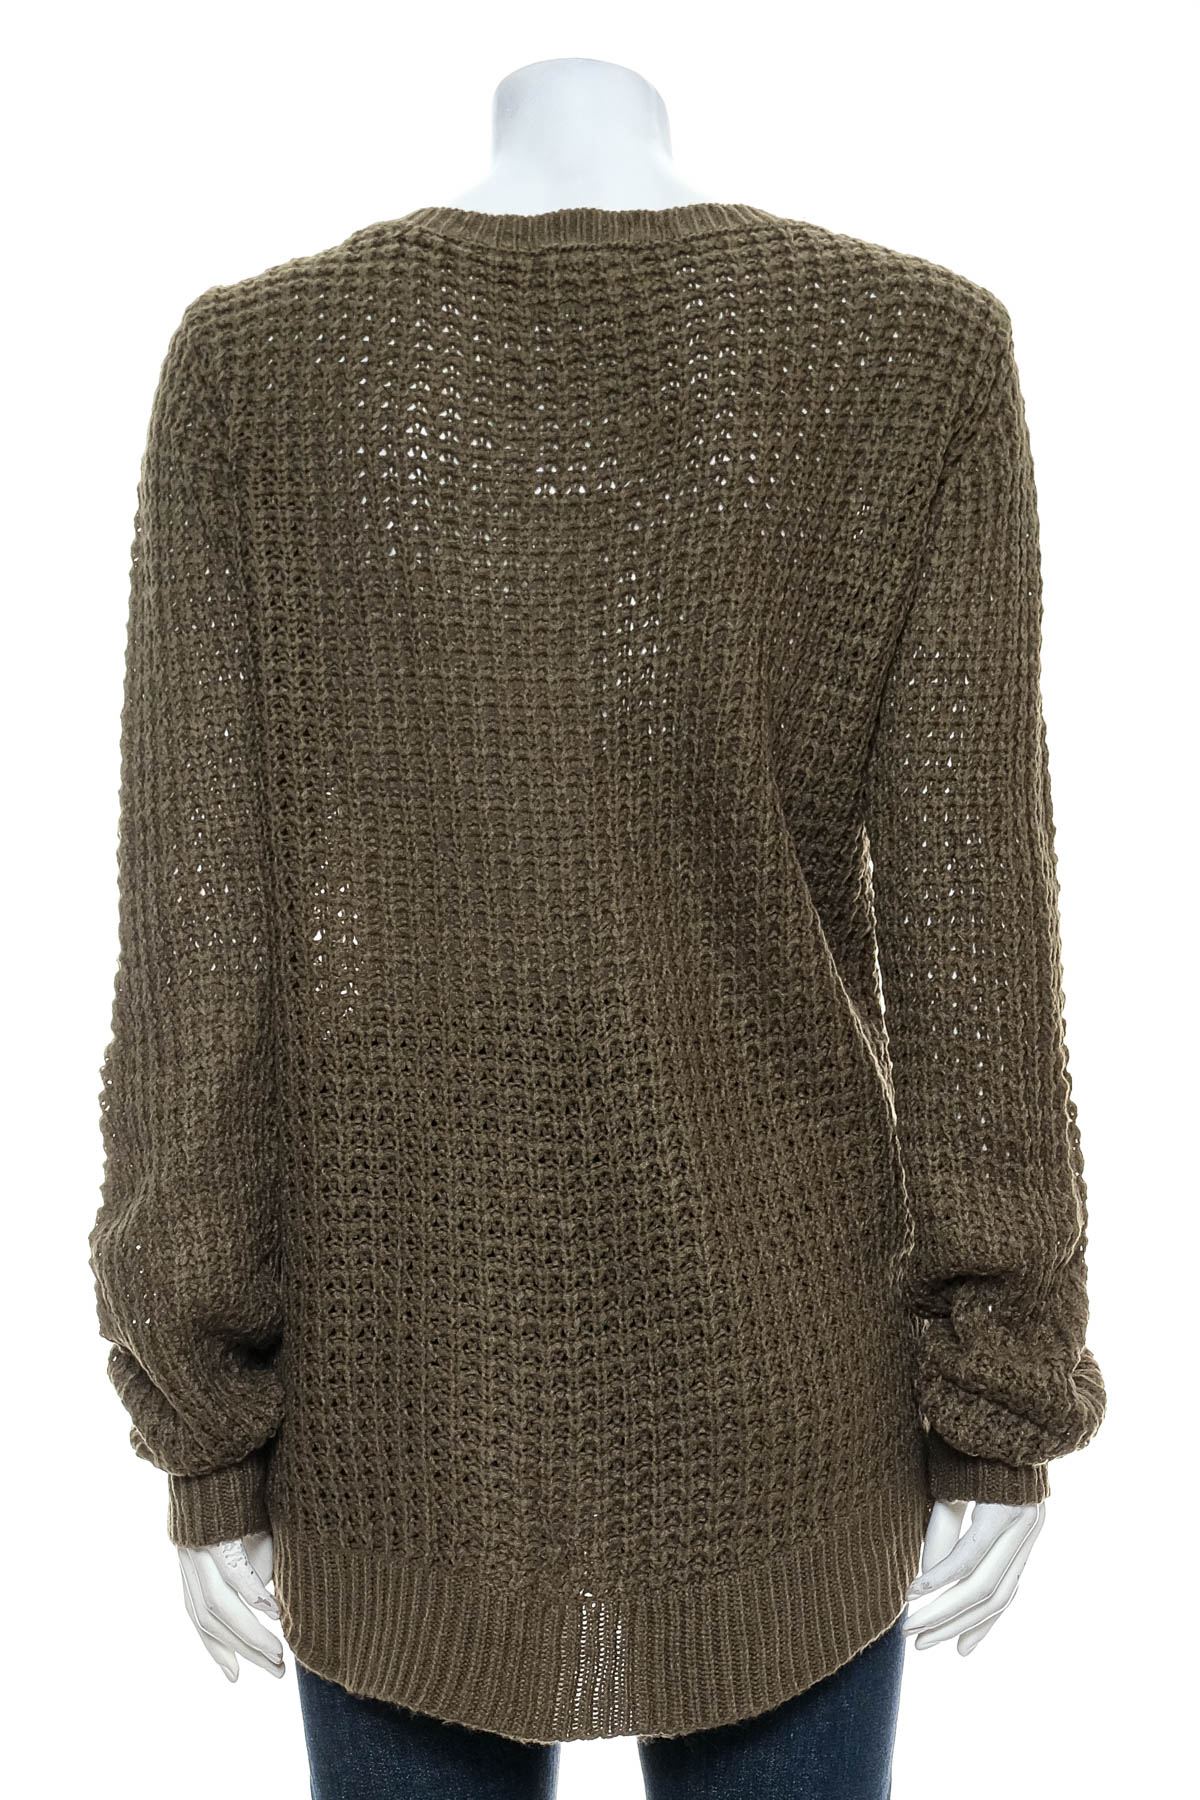 Women's sweater - Ardene - 1